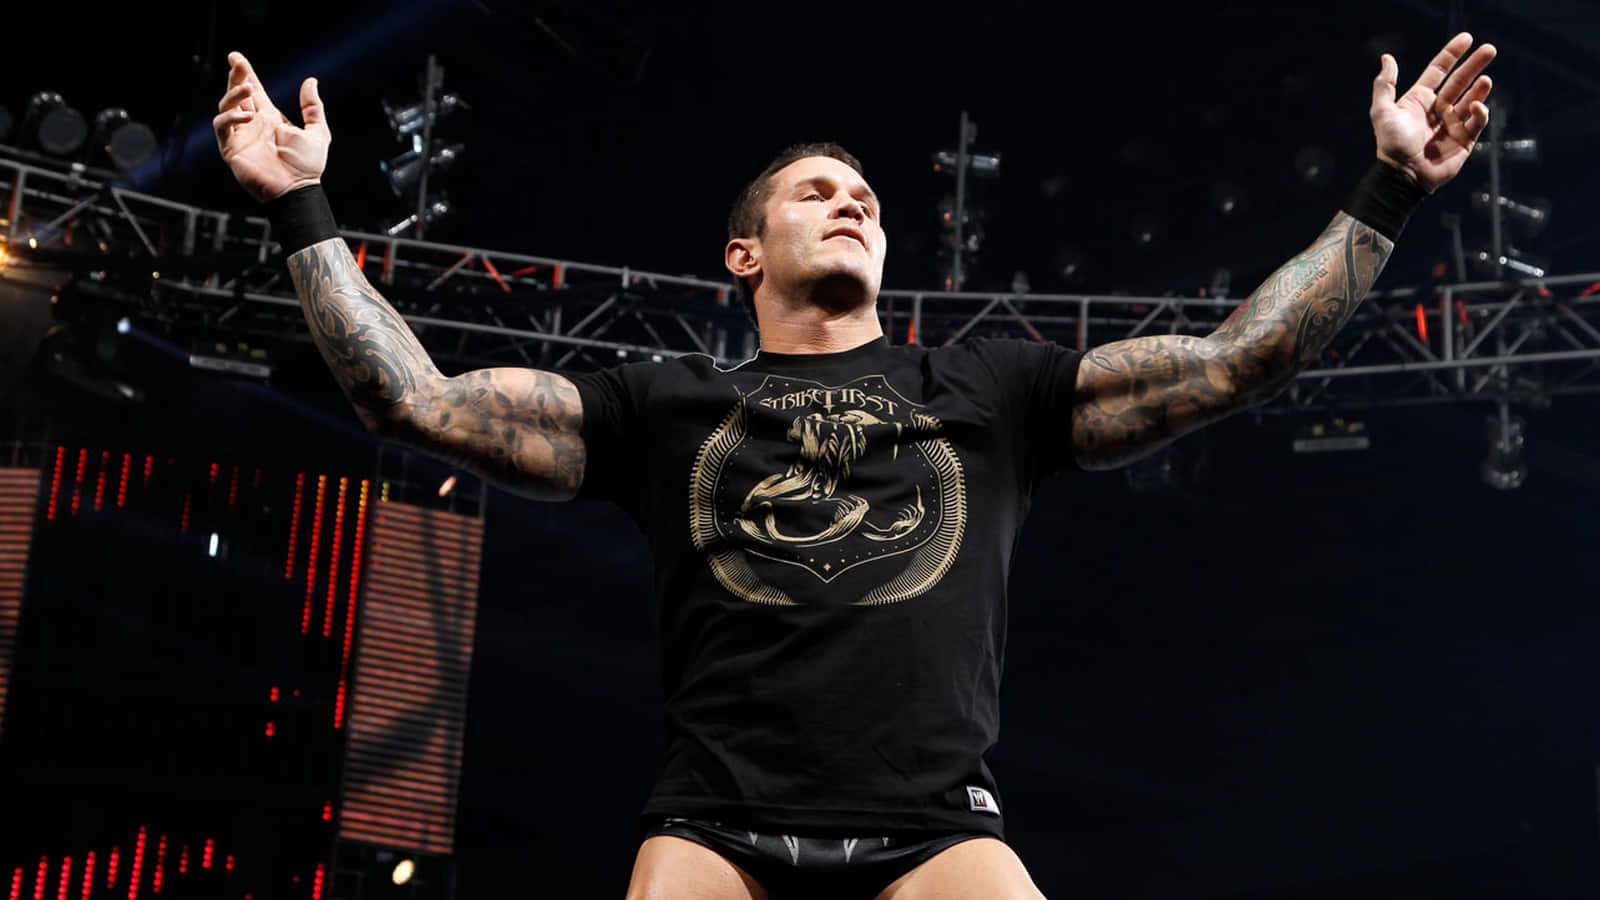 Legendary Wwe Wrestler, Randy Orton